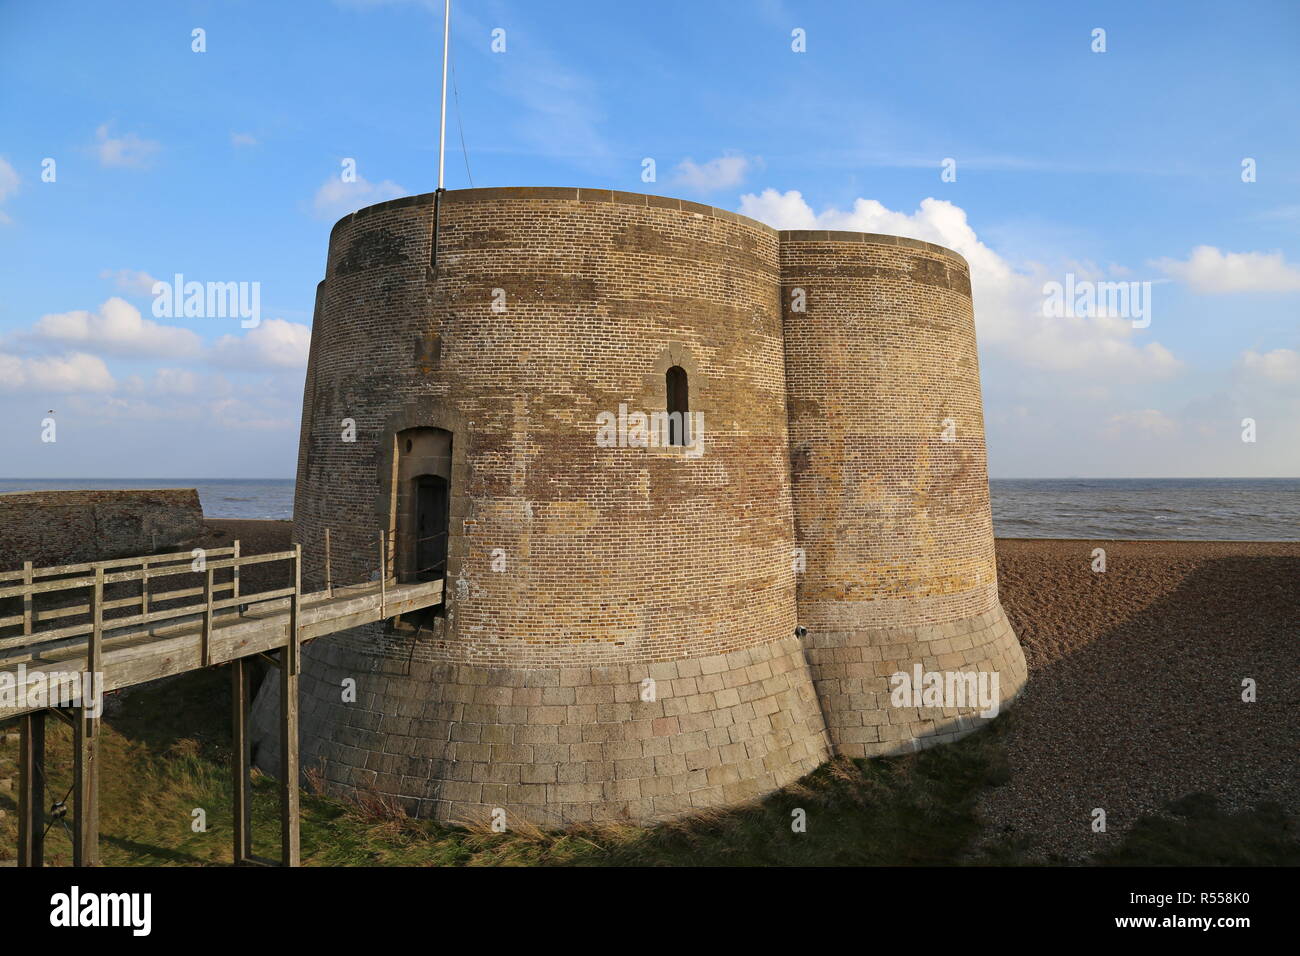 La tour Martello (aujourd'hui monument Trust), Aldeburgh, Suffolk district côtier, Suffolk, East Anglia, Angleterre, Grande-Bretagne, Royaume-Uni, UK, Europe Banque D'Images